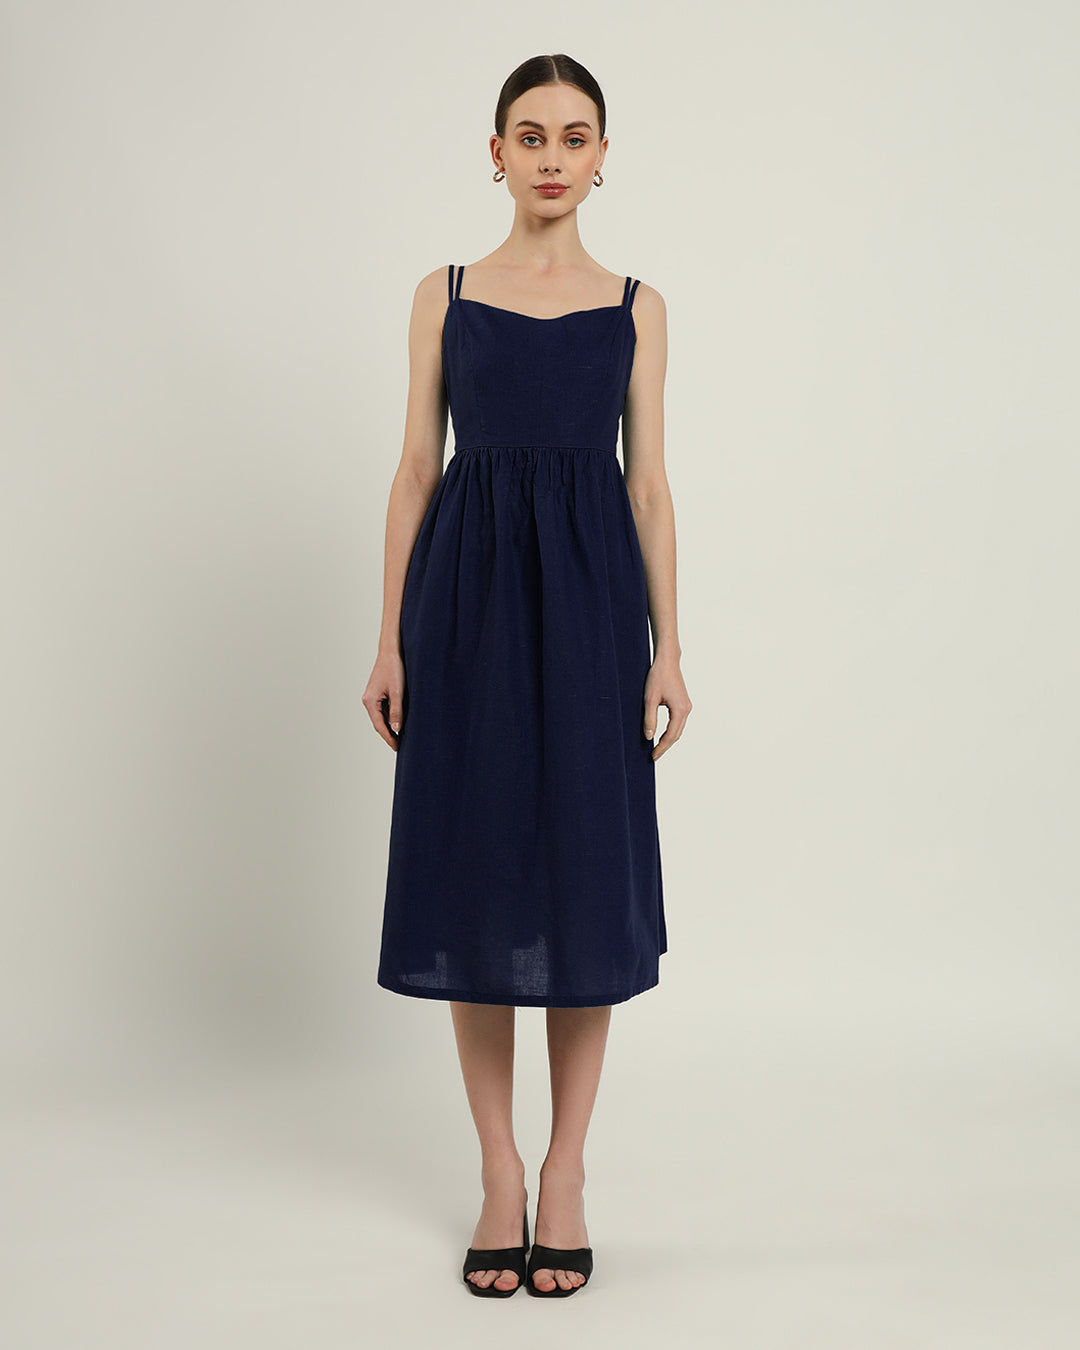 The Haiti Daisy Midnight Blue Linen Dress